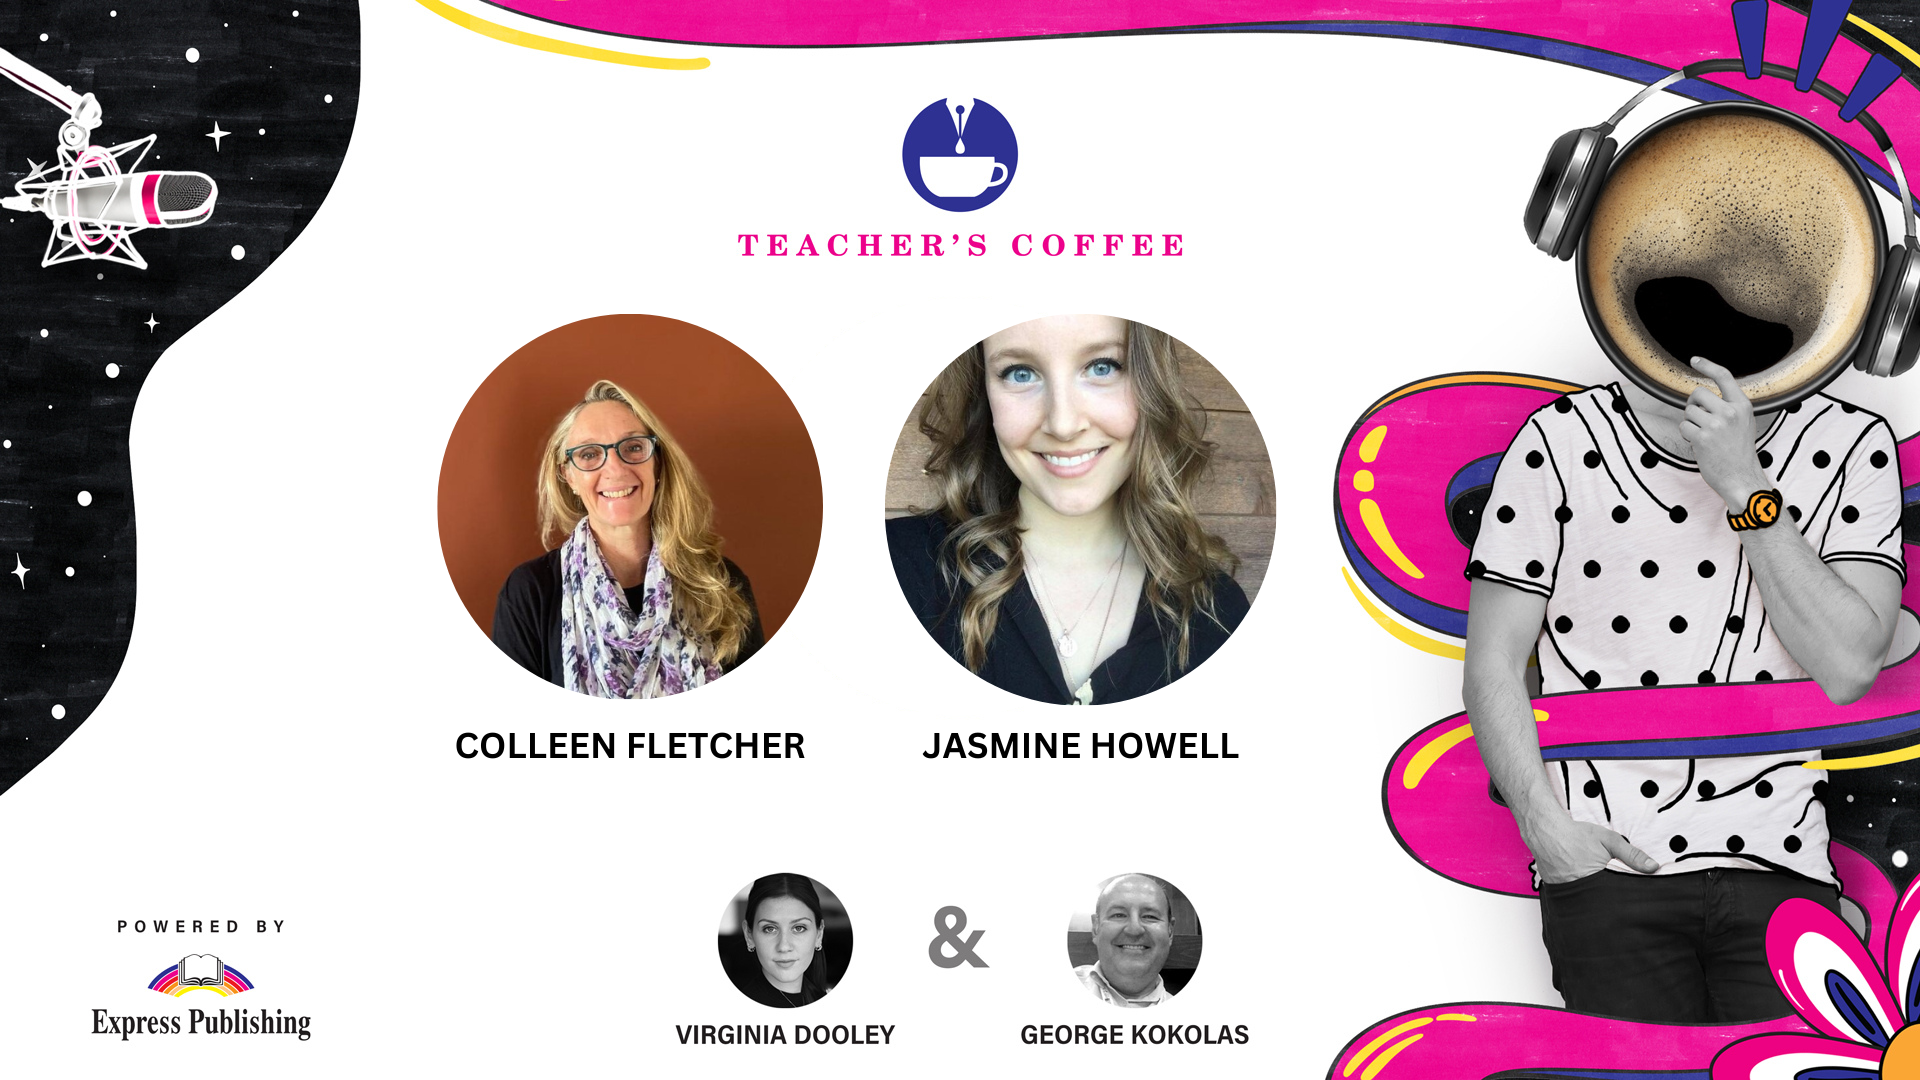 S07E09 Teacher’s Coffee with Colleen Fletcher & Jasmine Howell